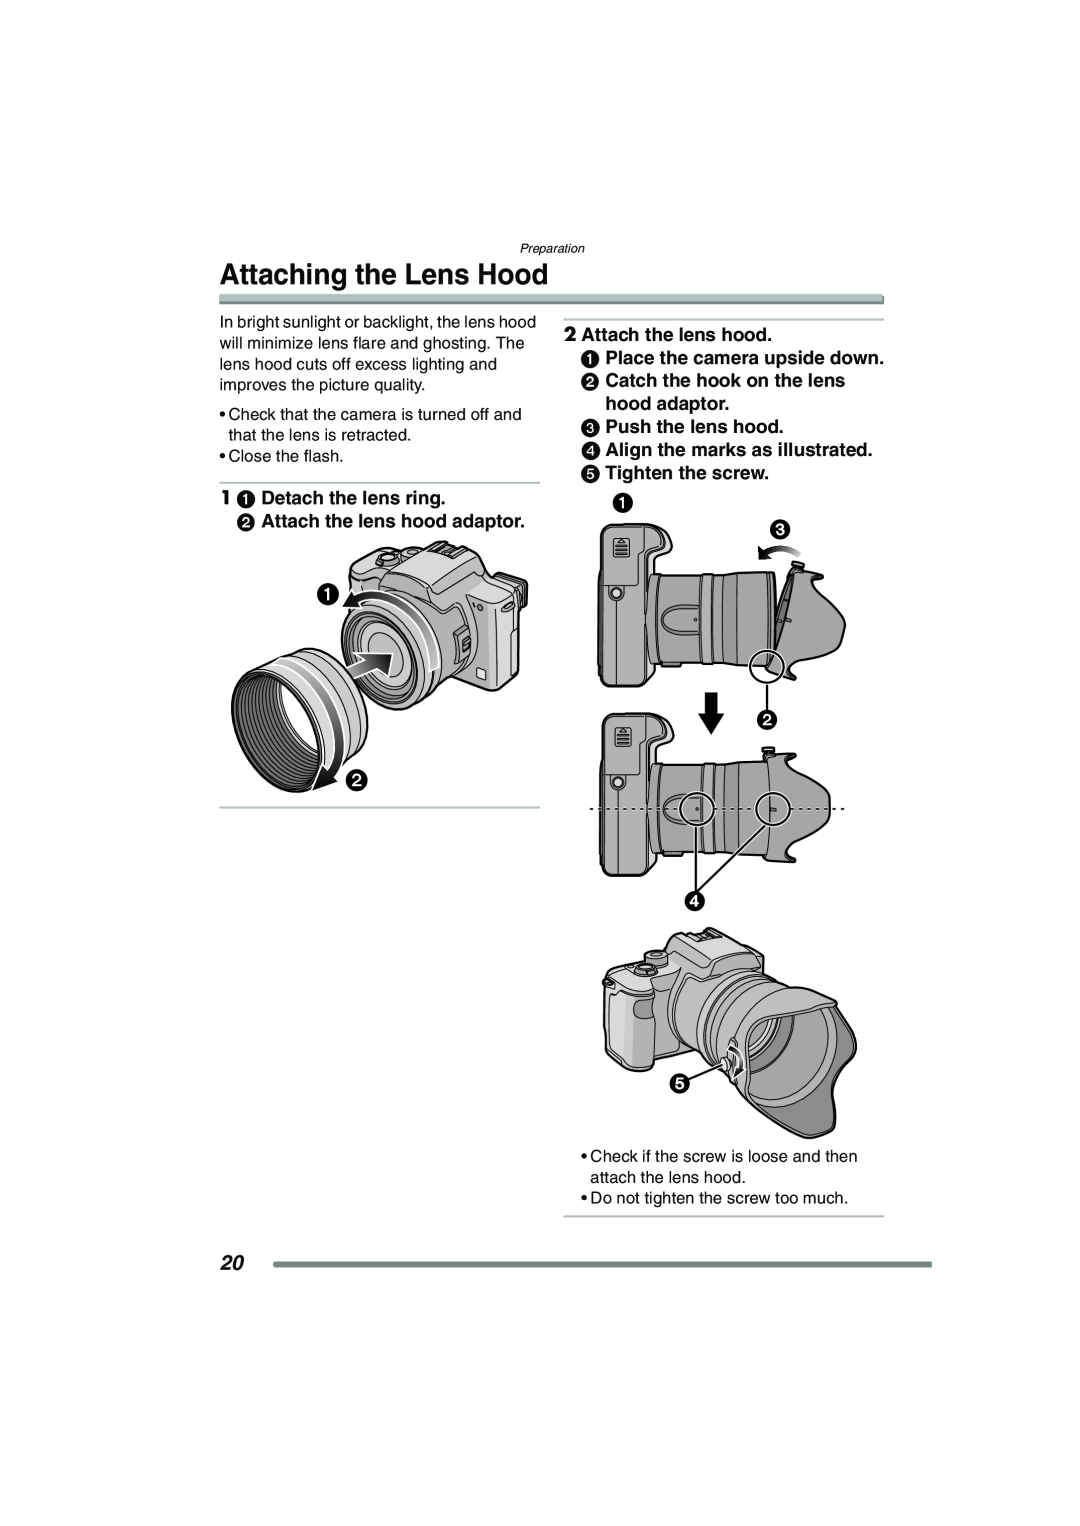 Panasonic DMC-FZ20PP Attaching the Lens Hood, 1 1 Detach the lens ring 2 Attach the lens hood adaptor 